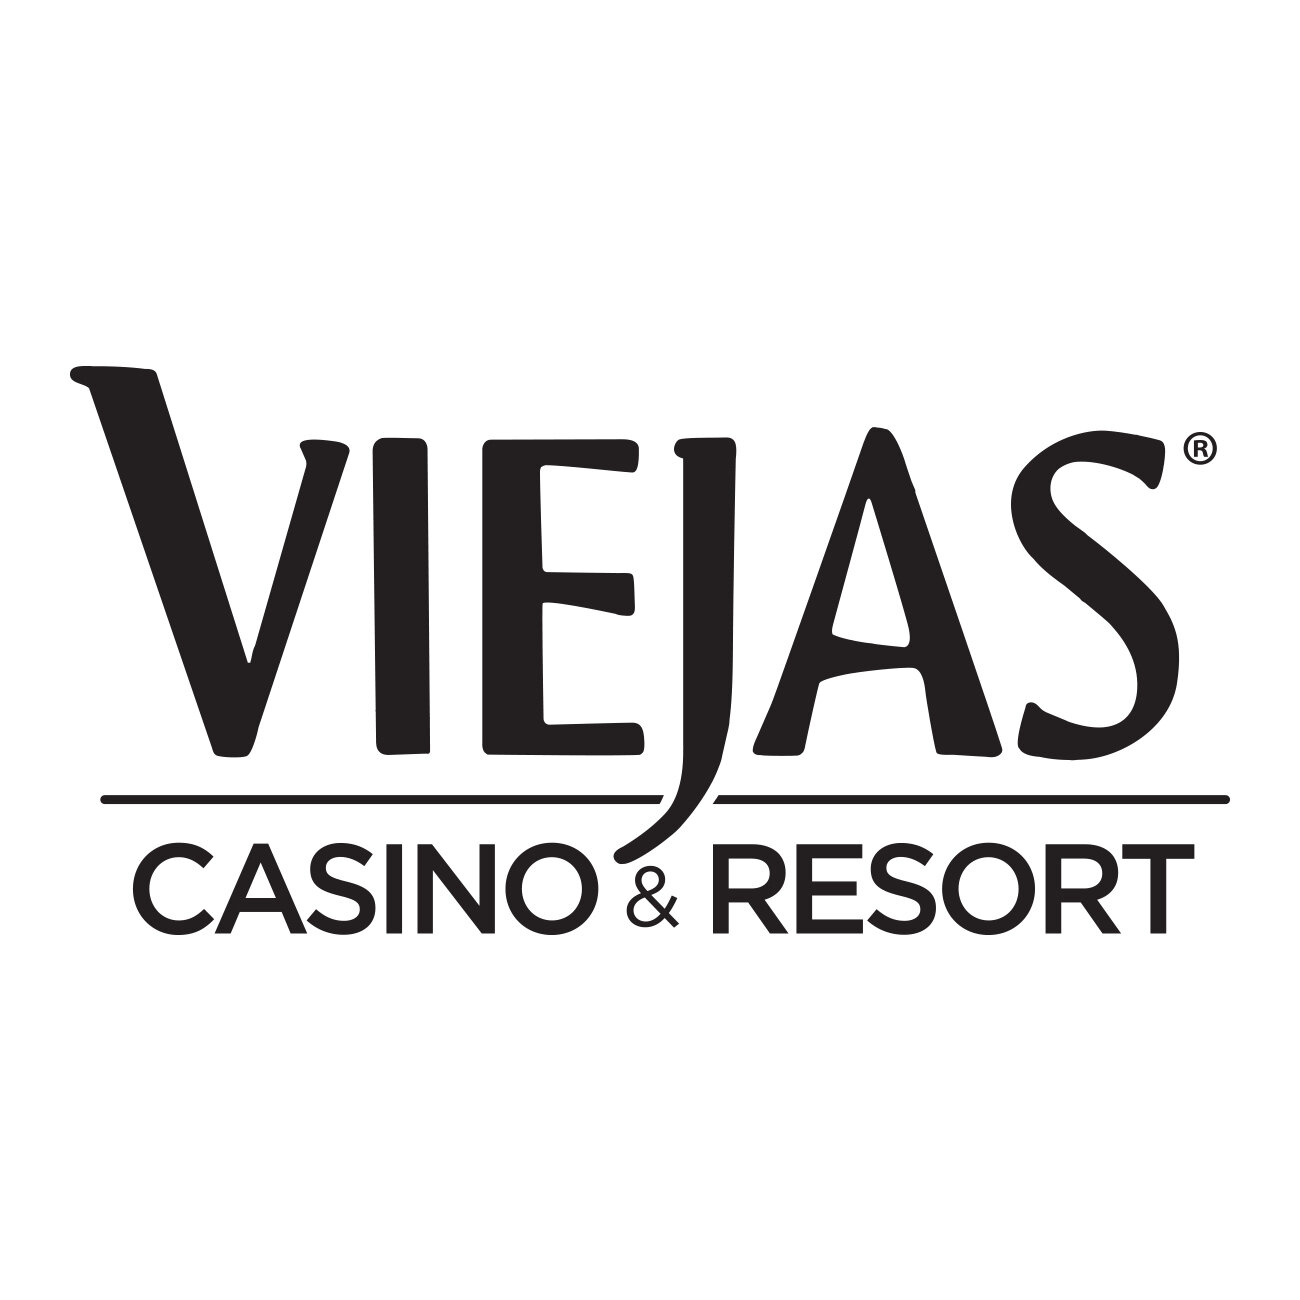 Viejas-Casino-and-Resort-logo-1300x1300-1.jpg